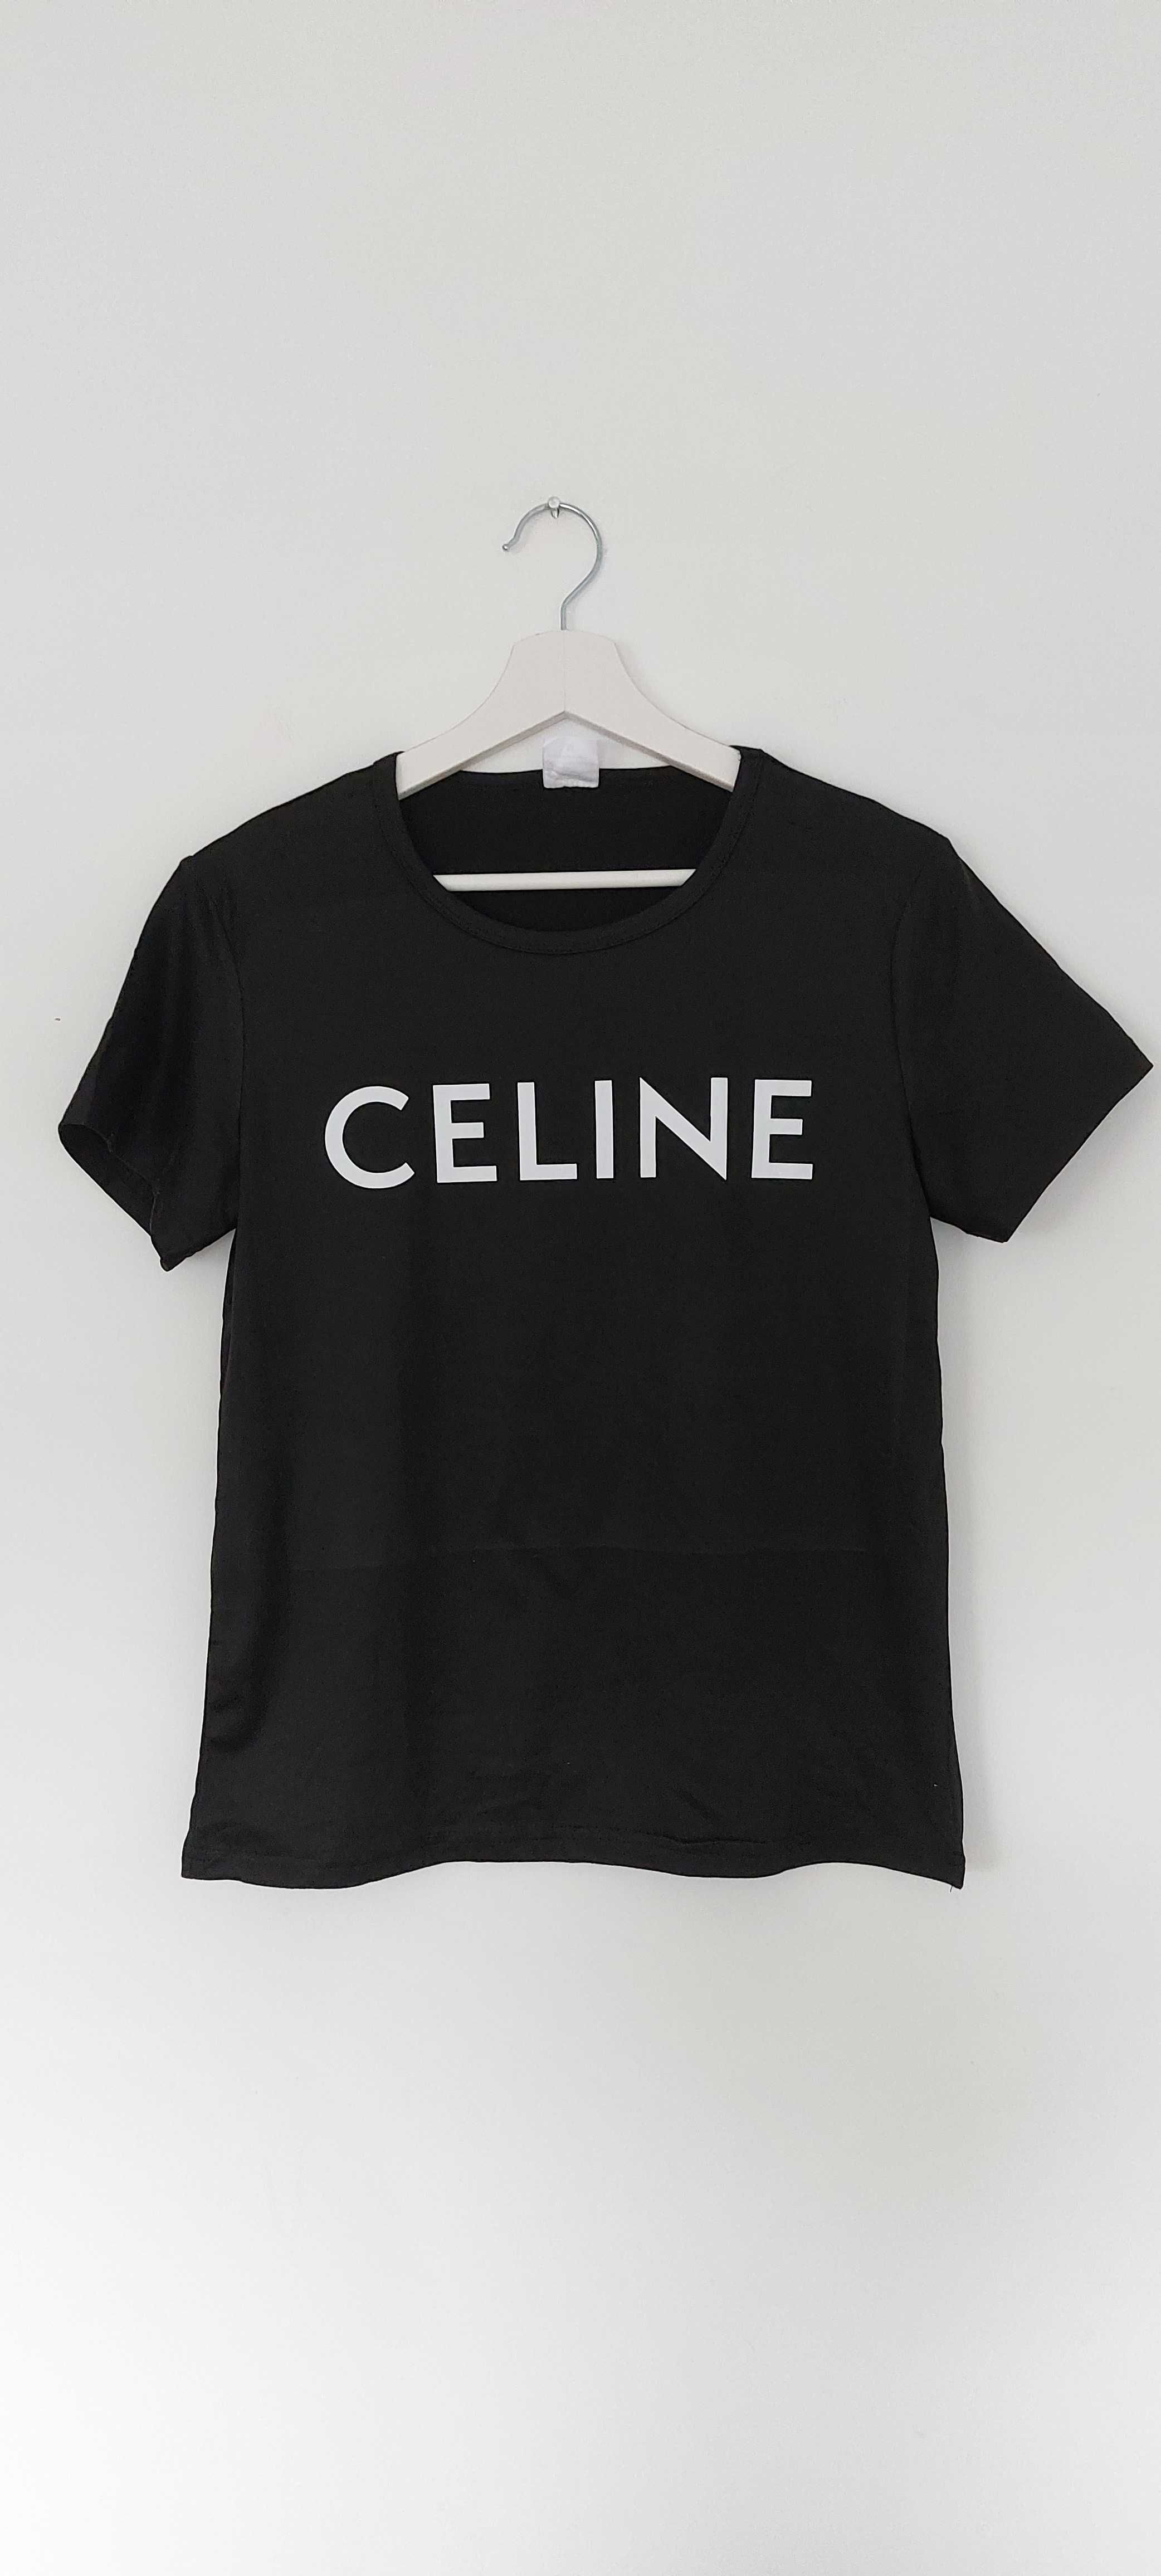 T-shirt Celine preta com logo branco.